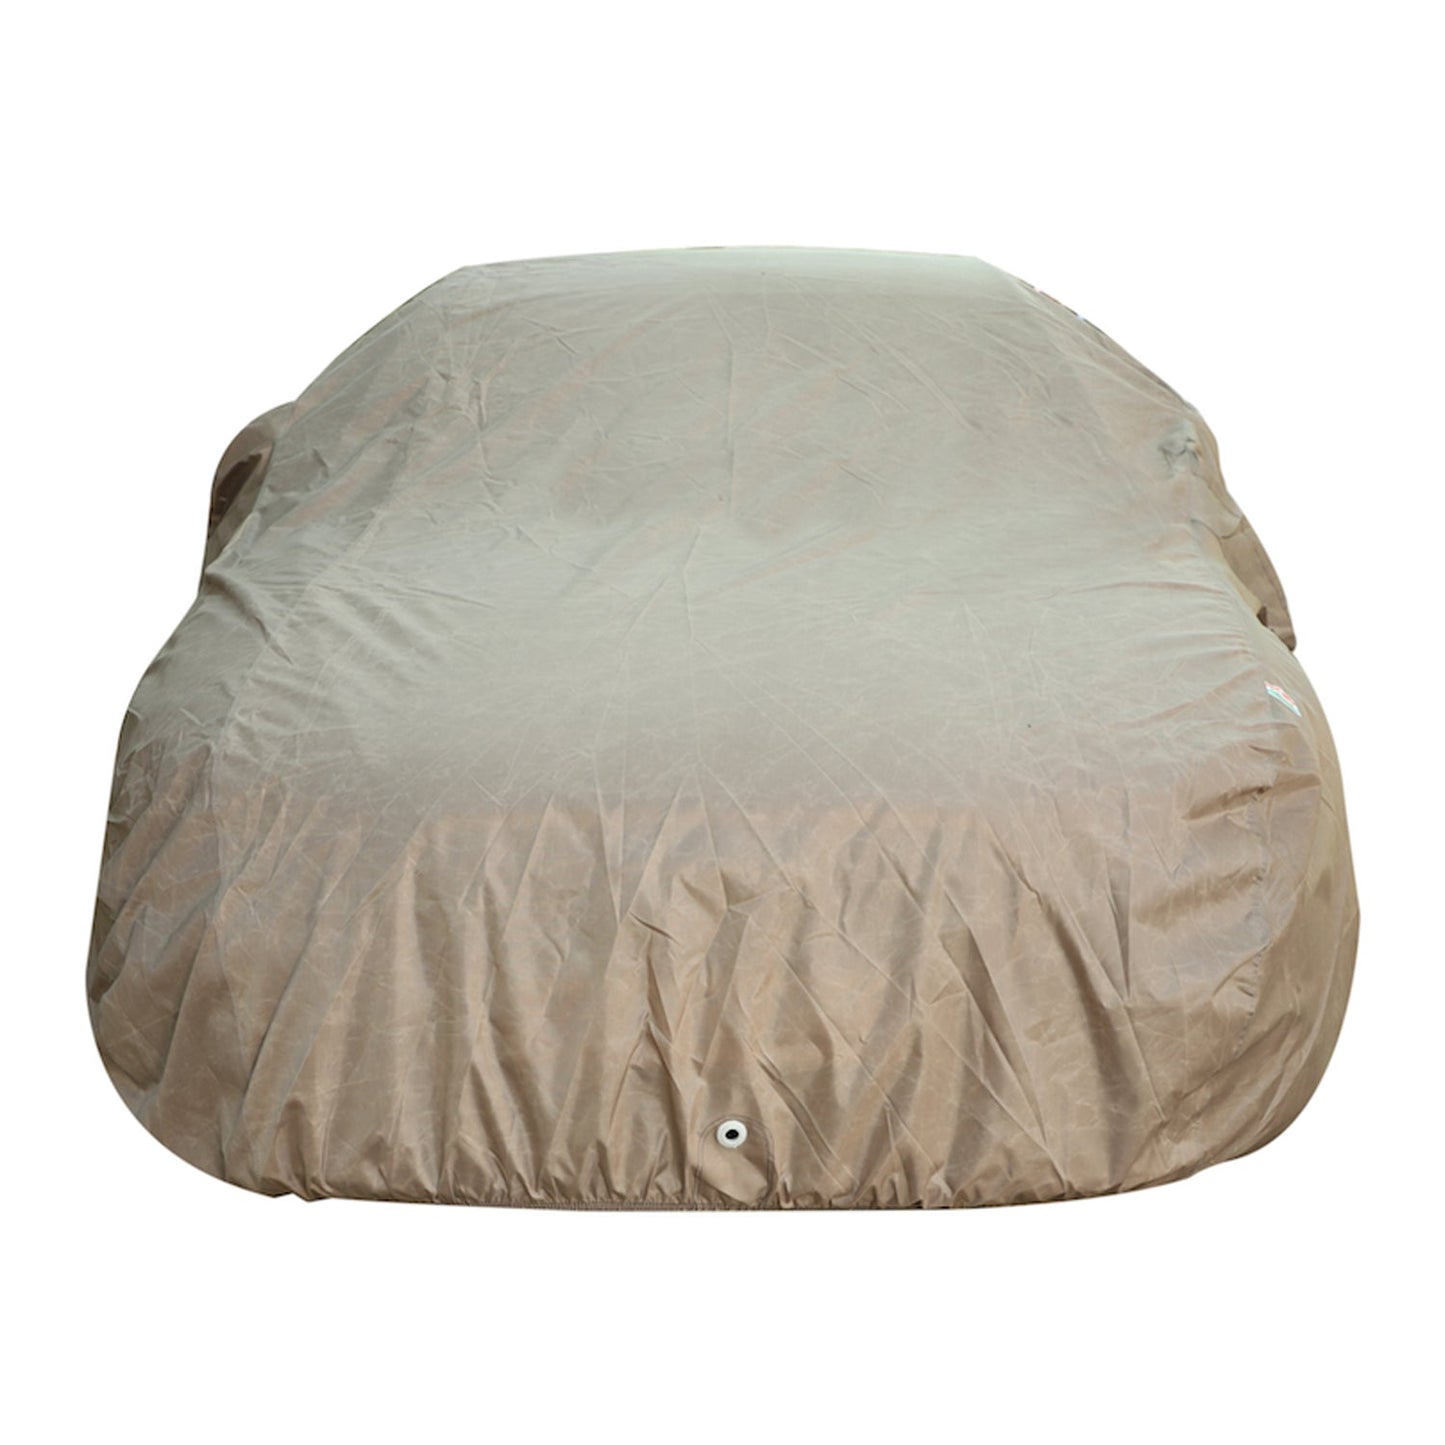 Oshotto Brown 100% Waterproof Car Body Cover with Mirror Pockets For Maruti Suzuki Celerio